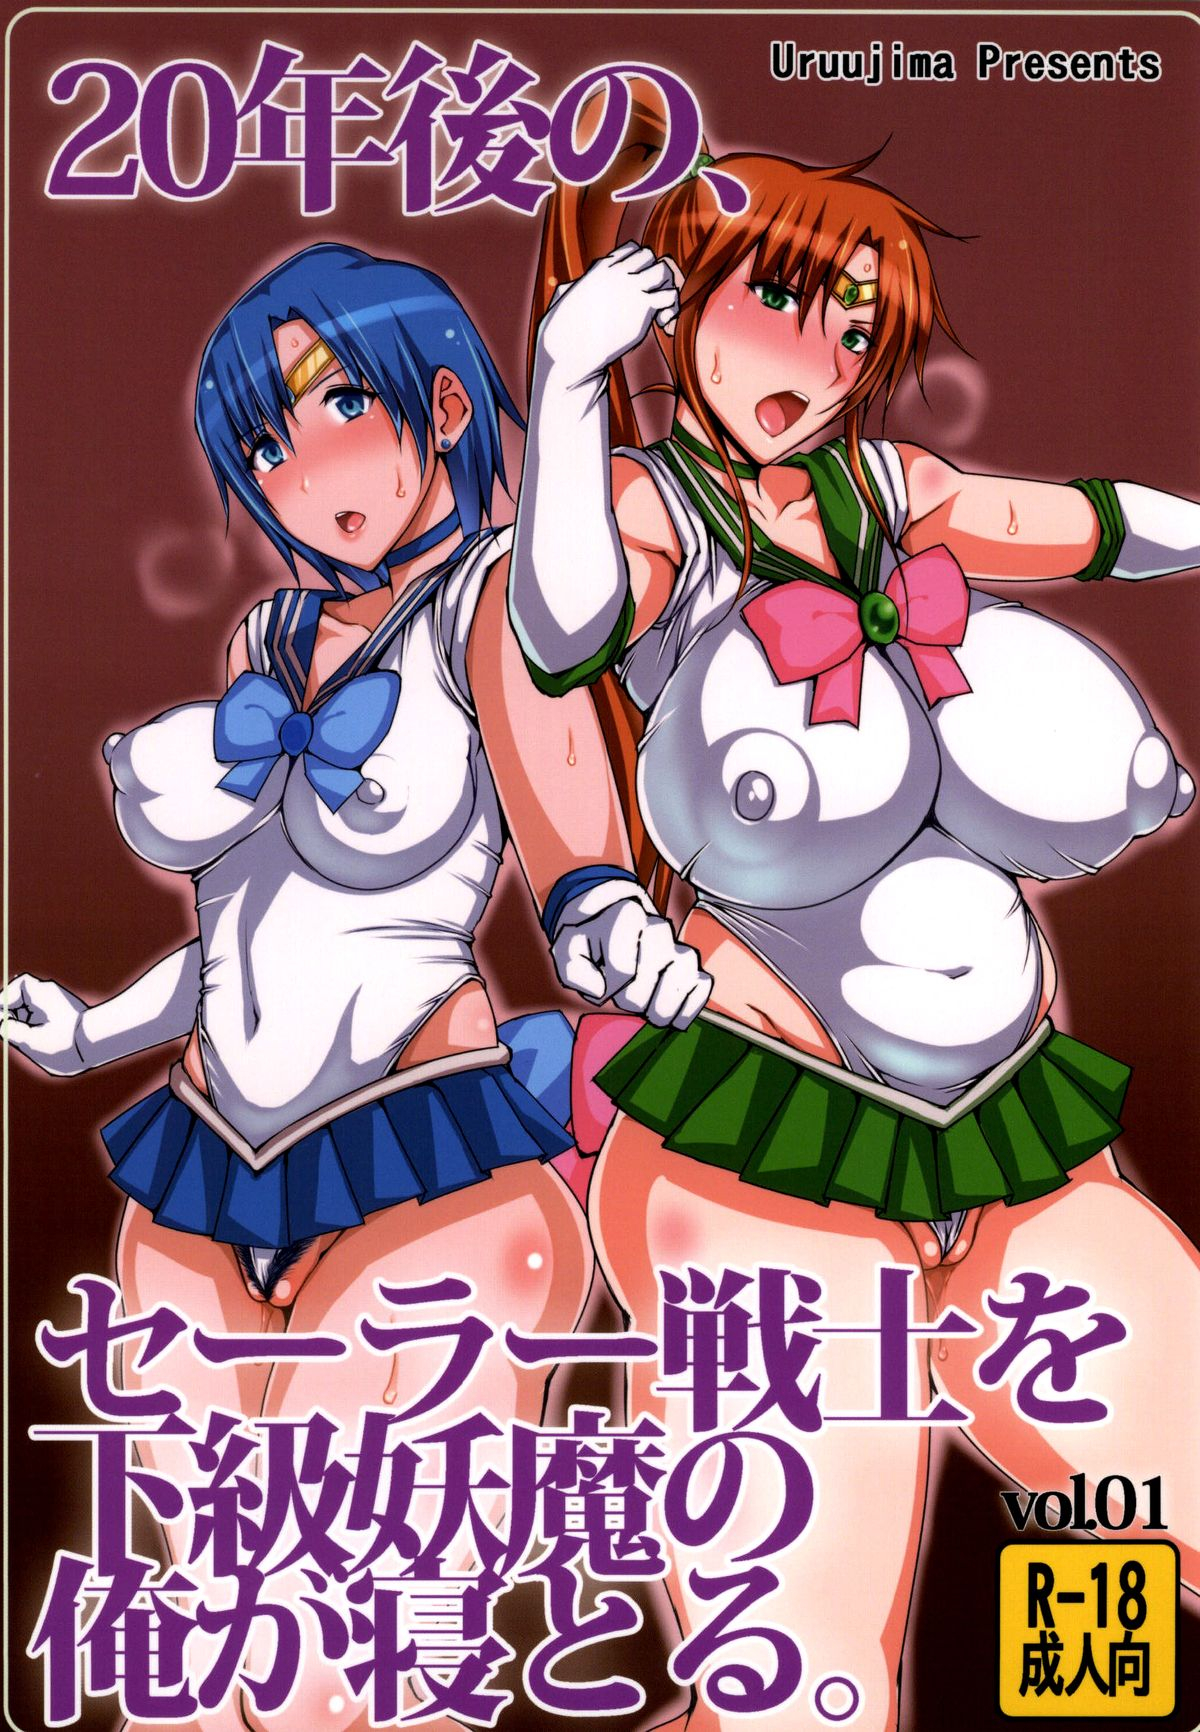 	Đọc truyện chữ 20 Nengo no, Sailor Senshi o Kakyuu Youma no Ore ga Netoru Chapter 1, tiếp chương 2